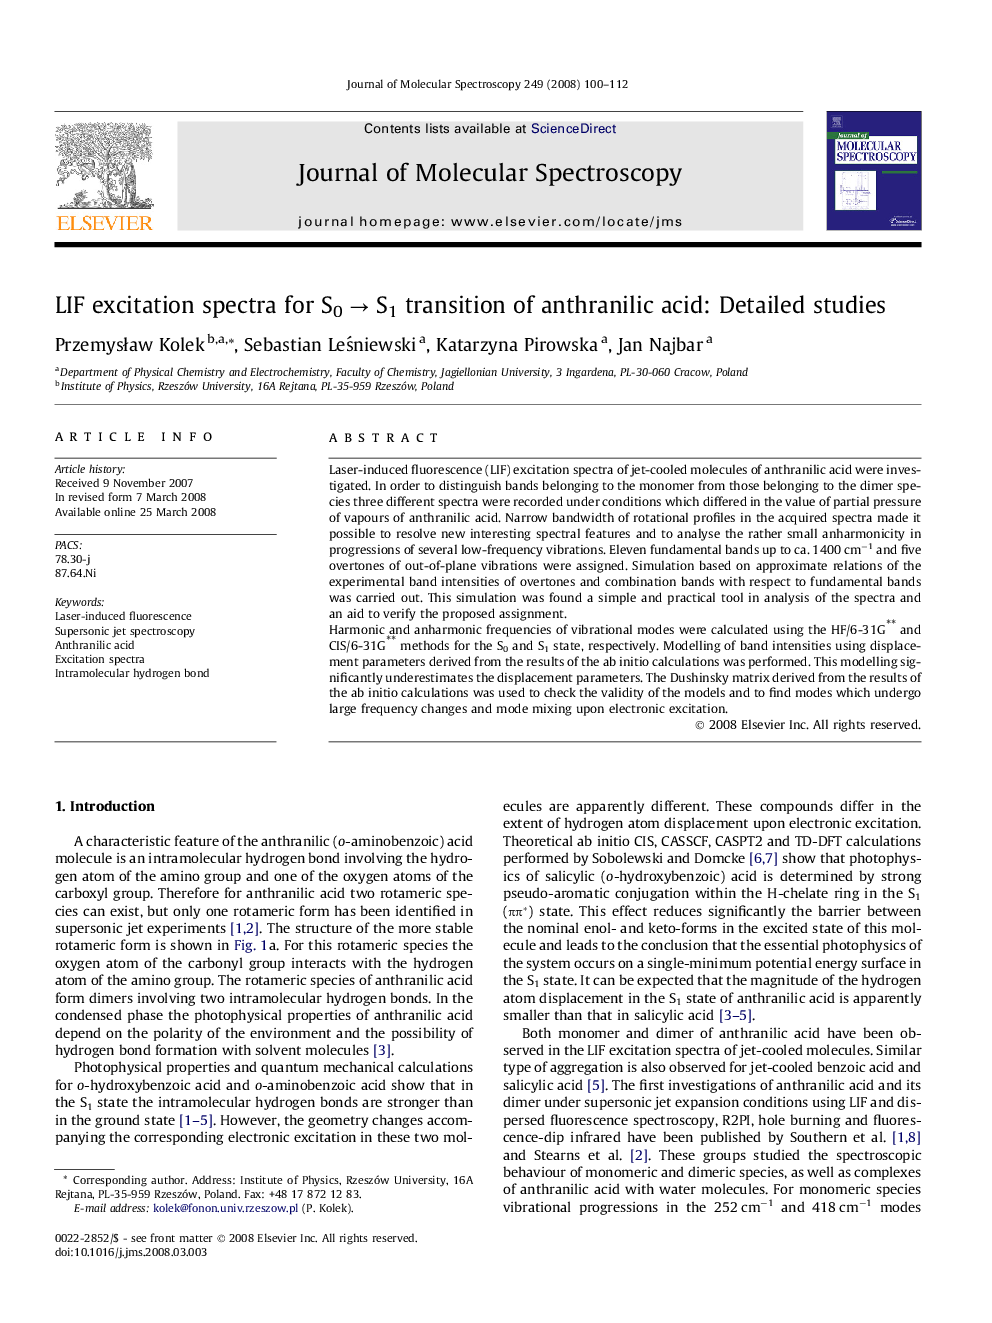 LIF excitation spectra for S0Â âÂ S1 transition of anthranilic acid: Detailed studies